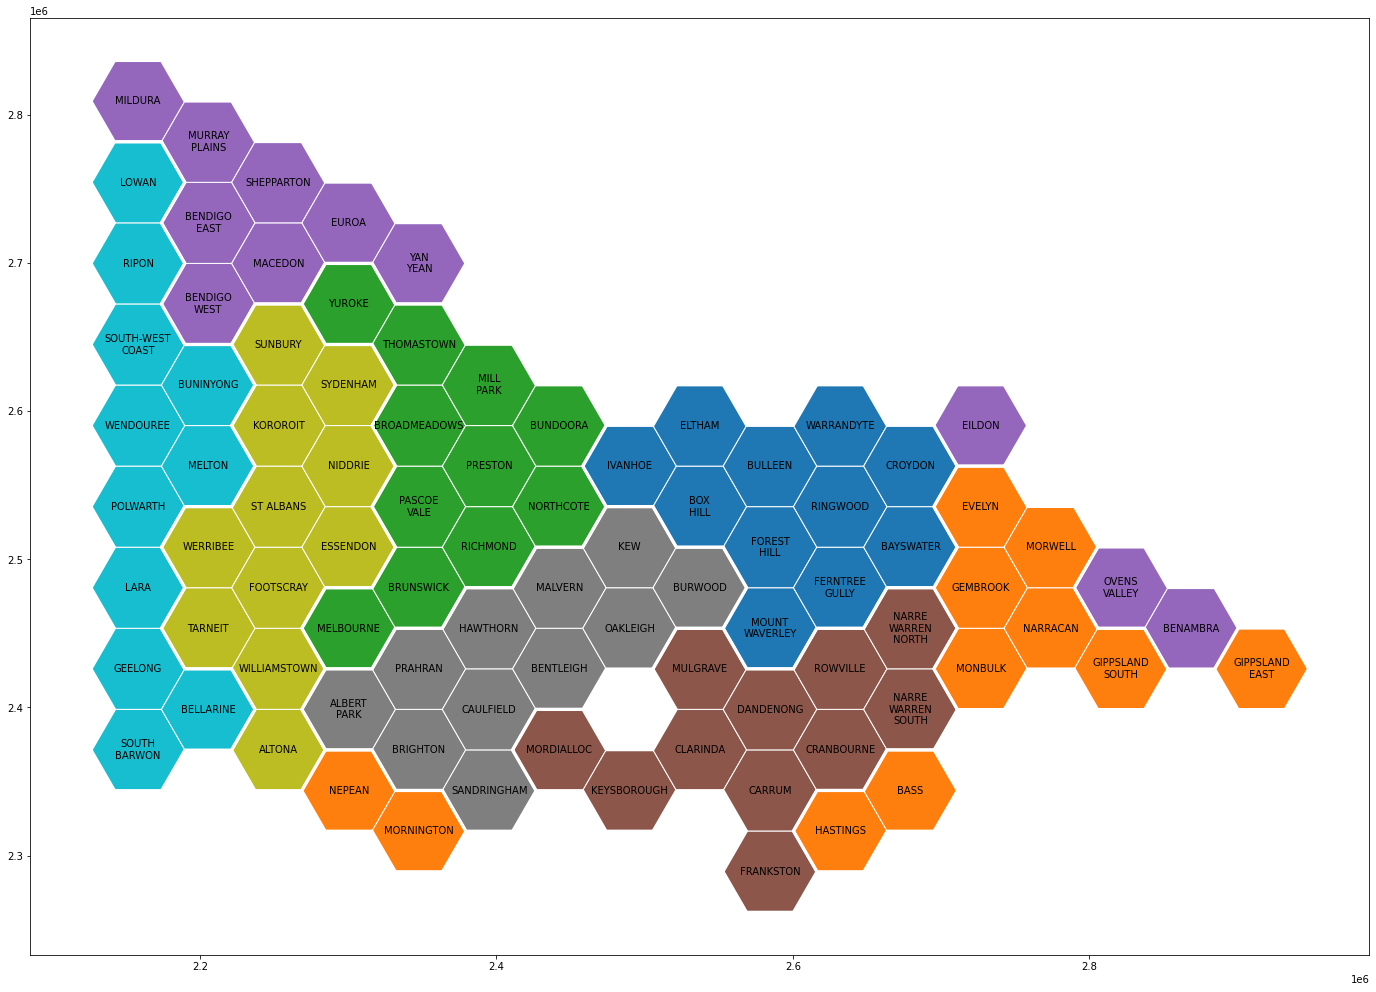 Plot of Victoria's electorates as equal area hexagons.